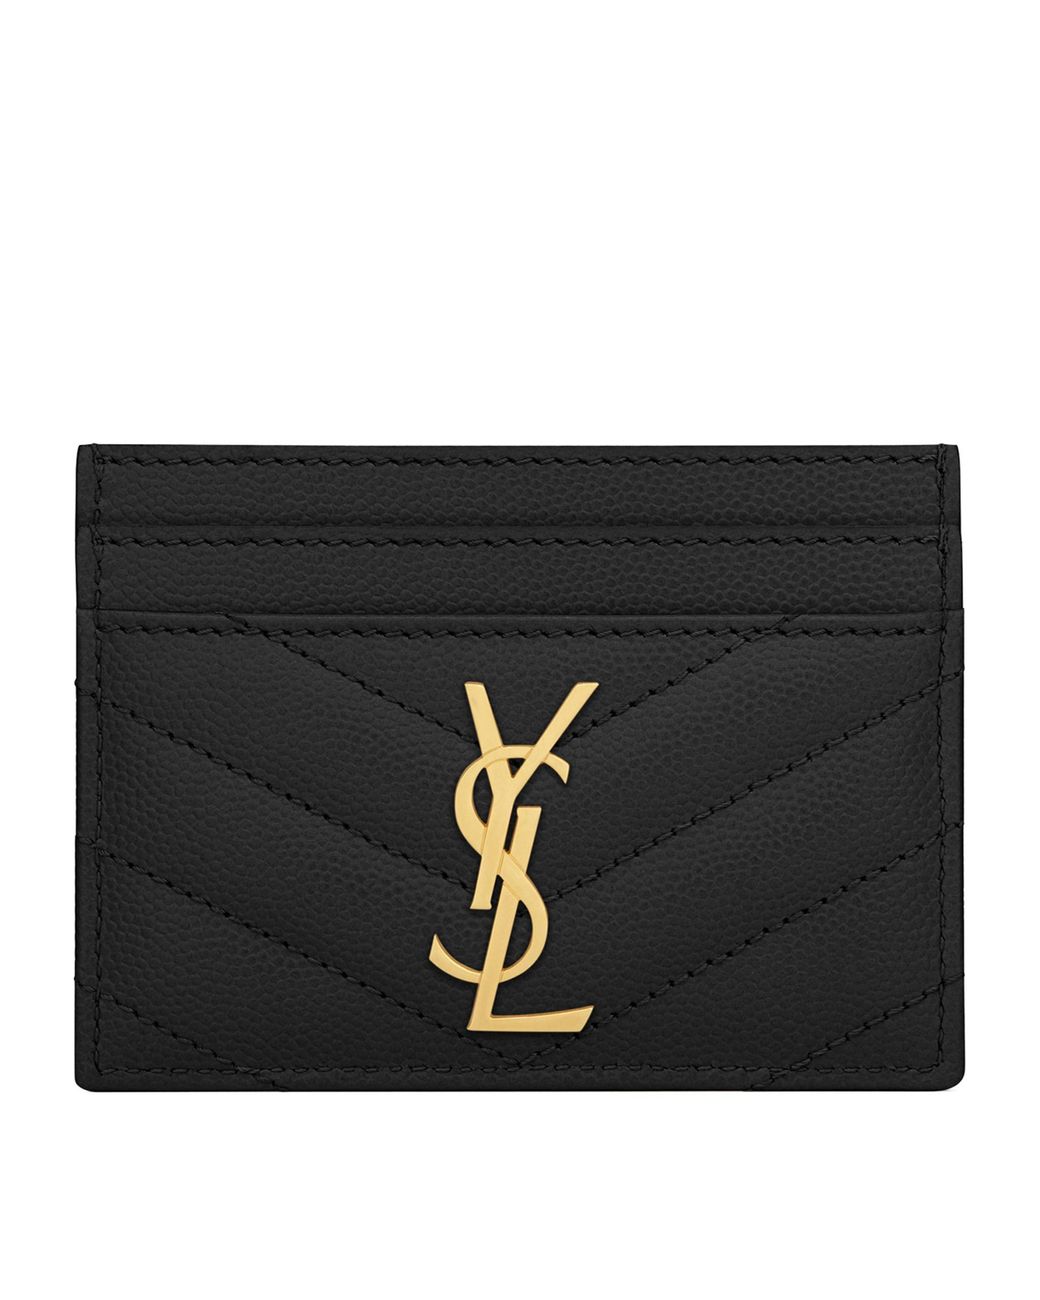 Saint Laurent Monogram Quilted Leather Card Holder in Nero (Black ...